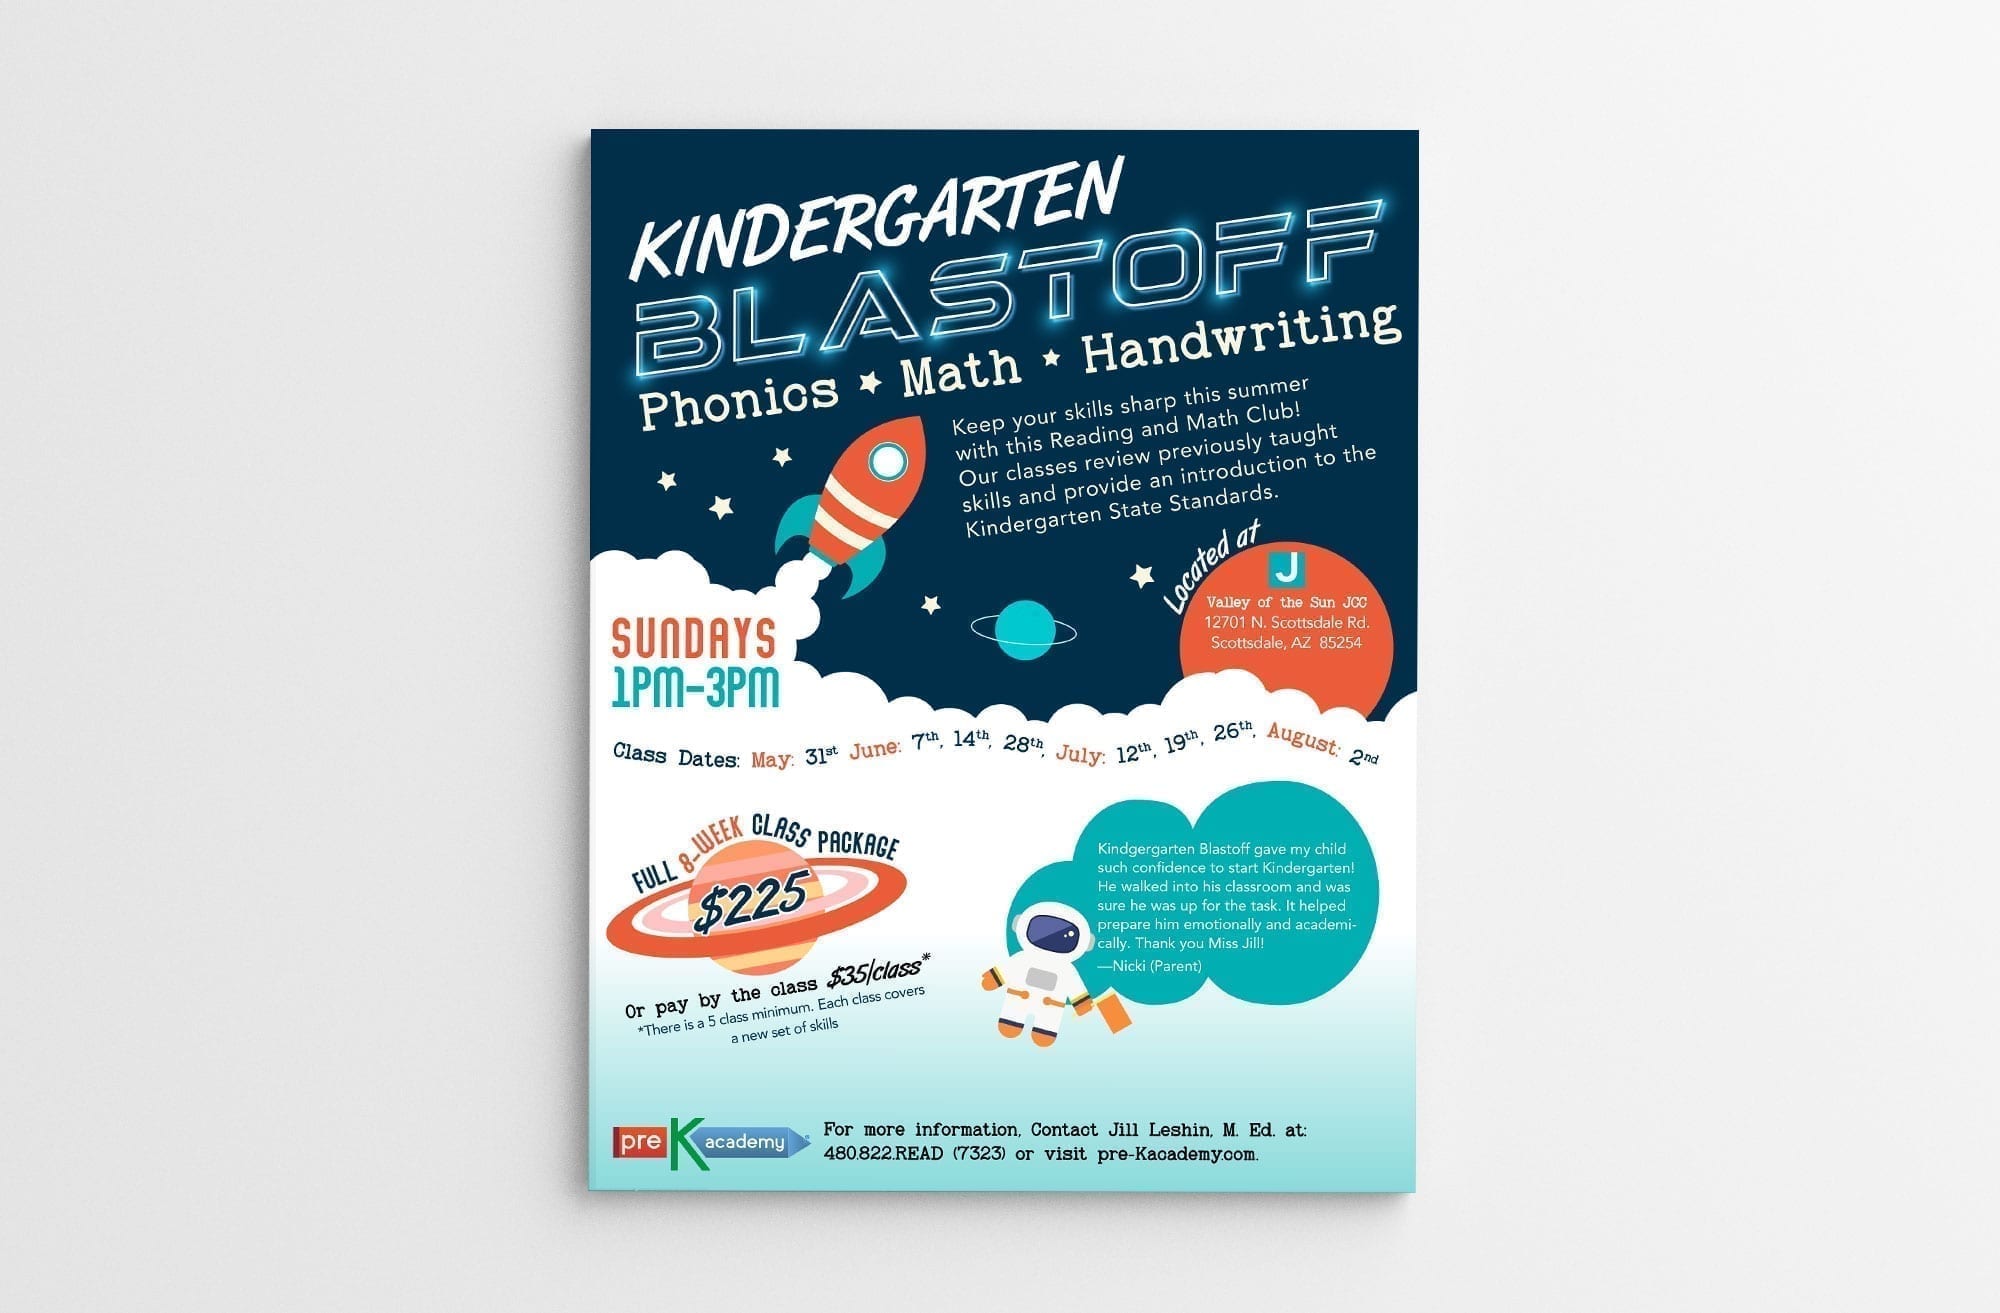 Kindergarten marketing flier design sample